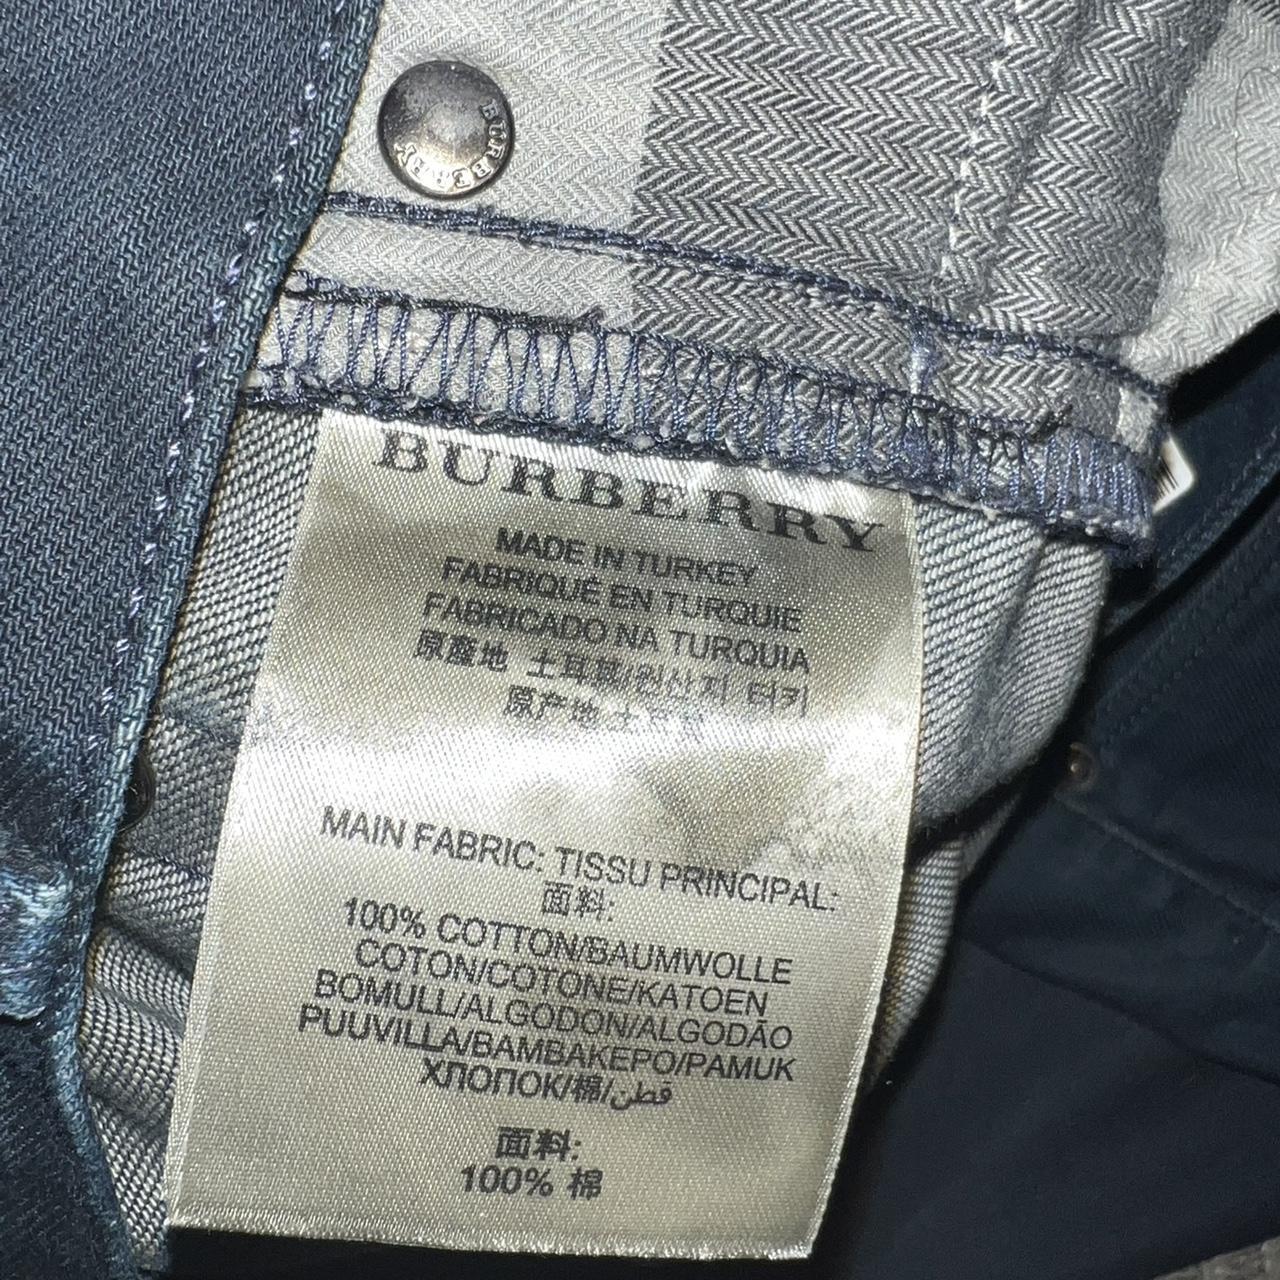 Burberry x Supreme Jeans - Brand New - Size - Depop